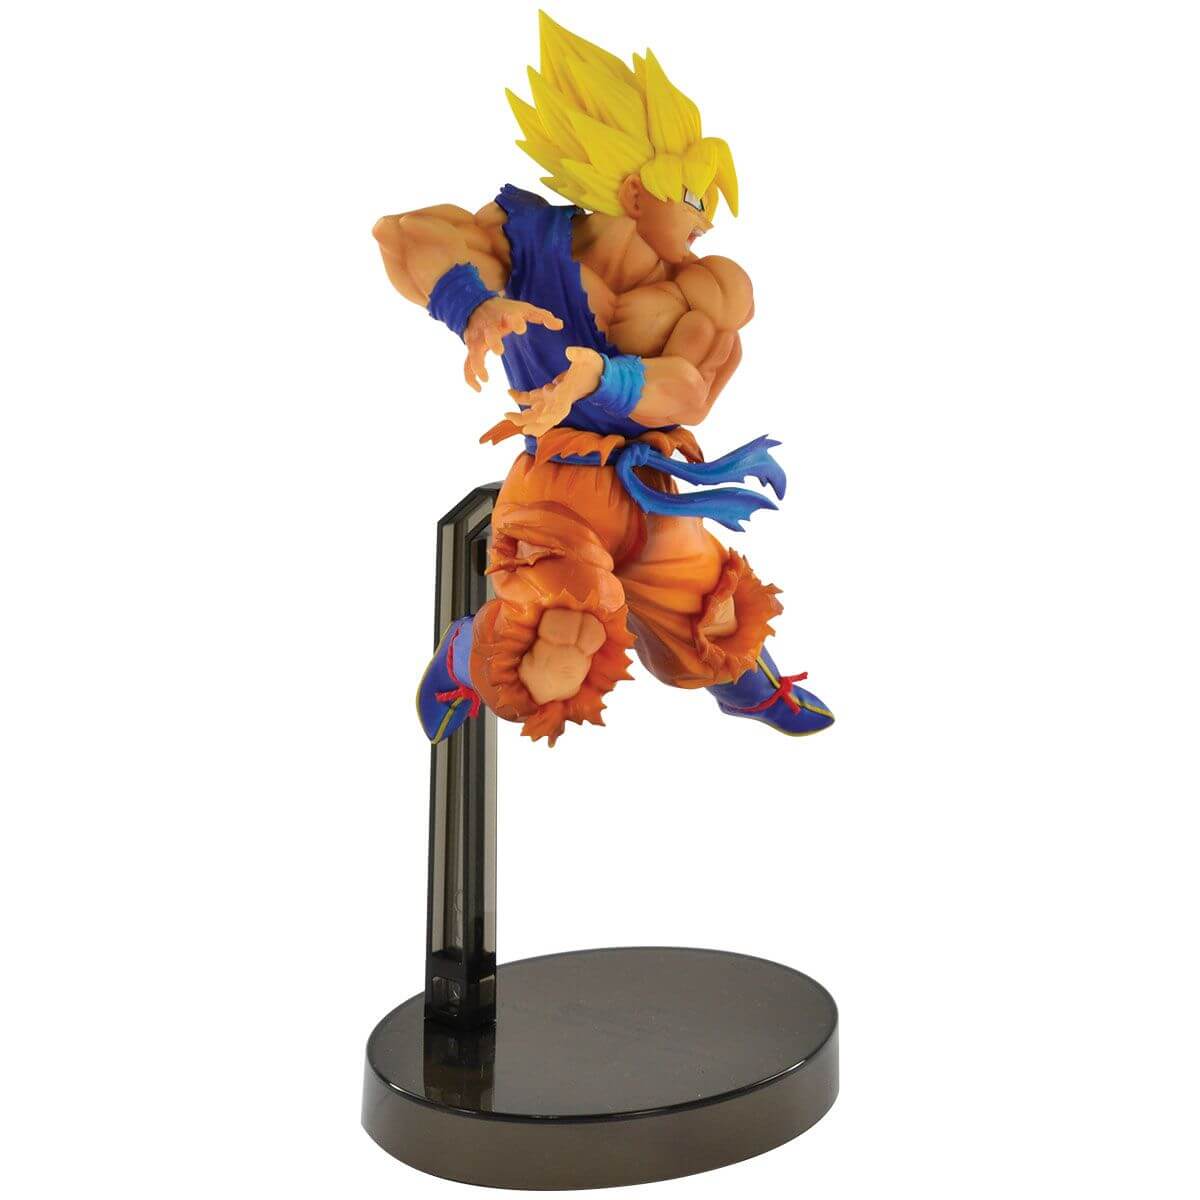 Action Figure Goku Super Saiyajin - Dragon Ball - Zaplox Colecionáveis